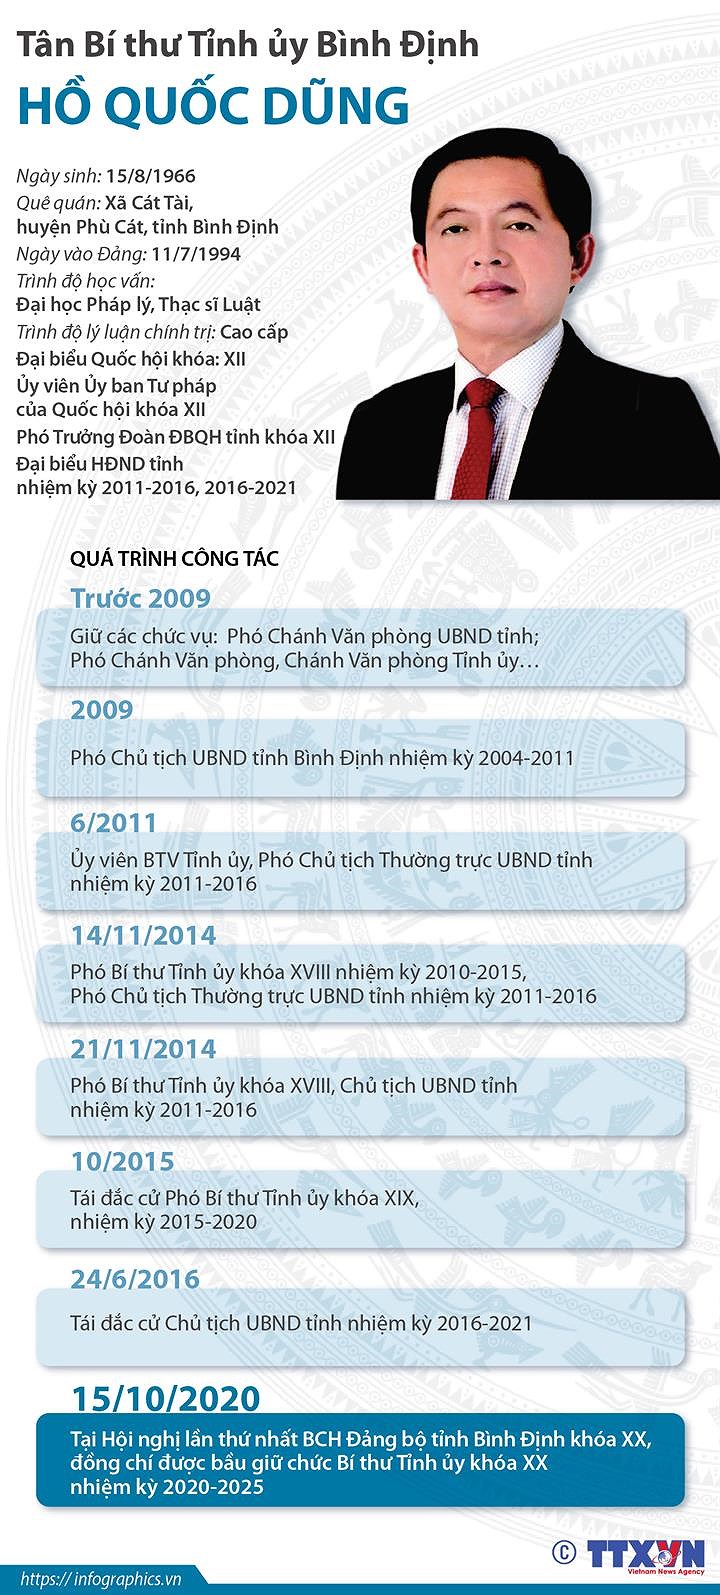 [Infographics] Tan Bi thu Tinh uy Binh Dinh Ho Quoc Dung hinh anh 1